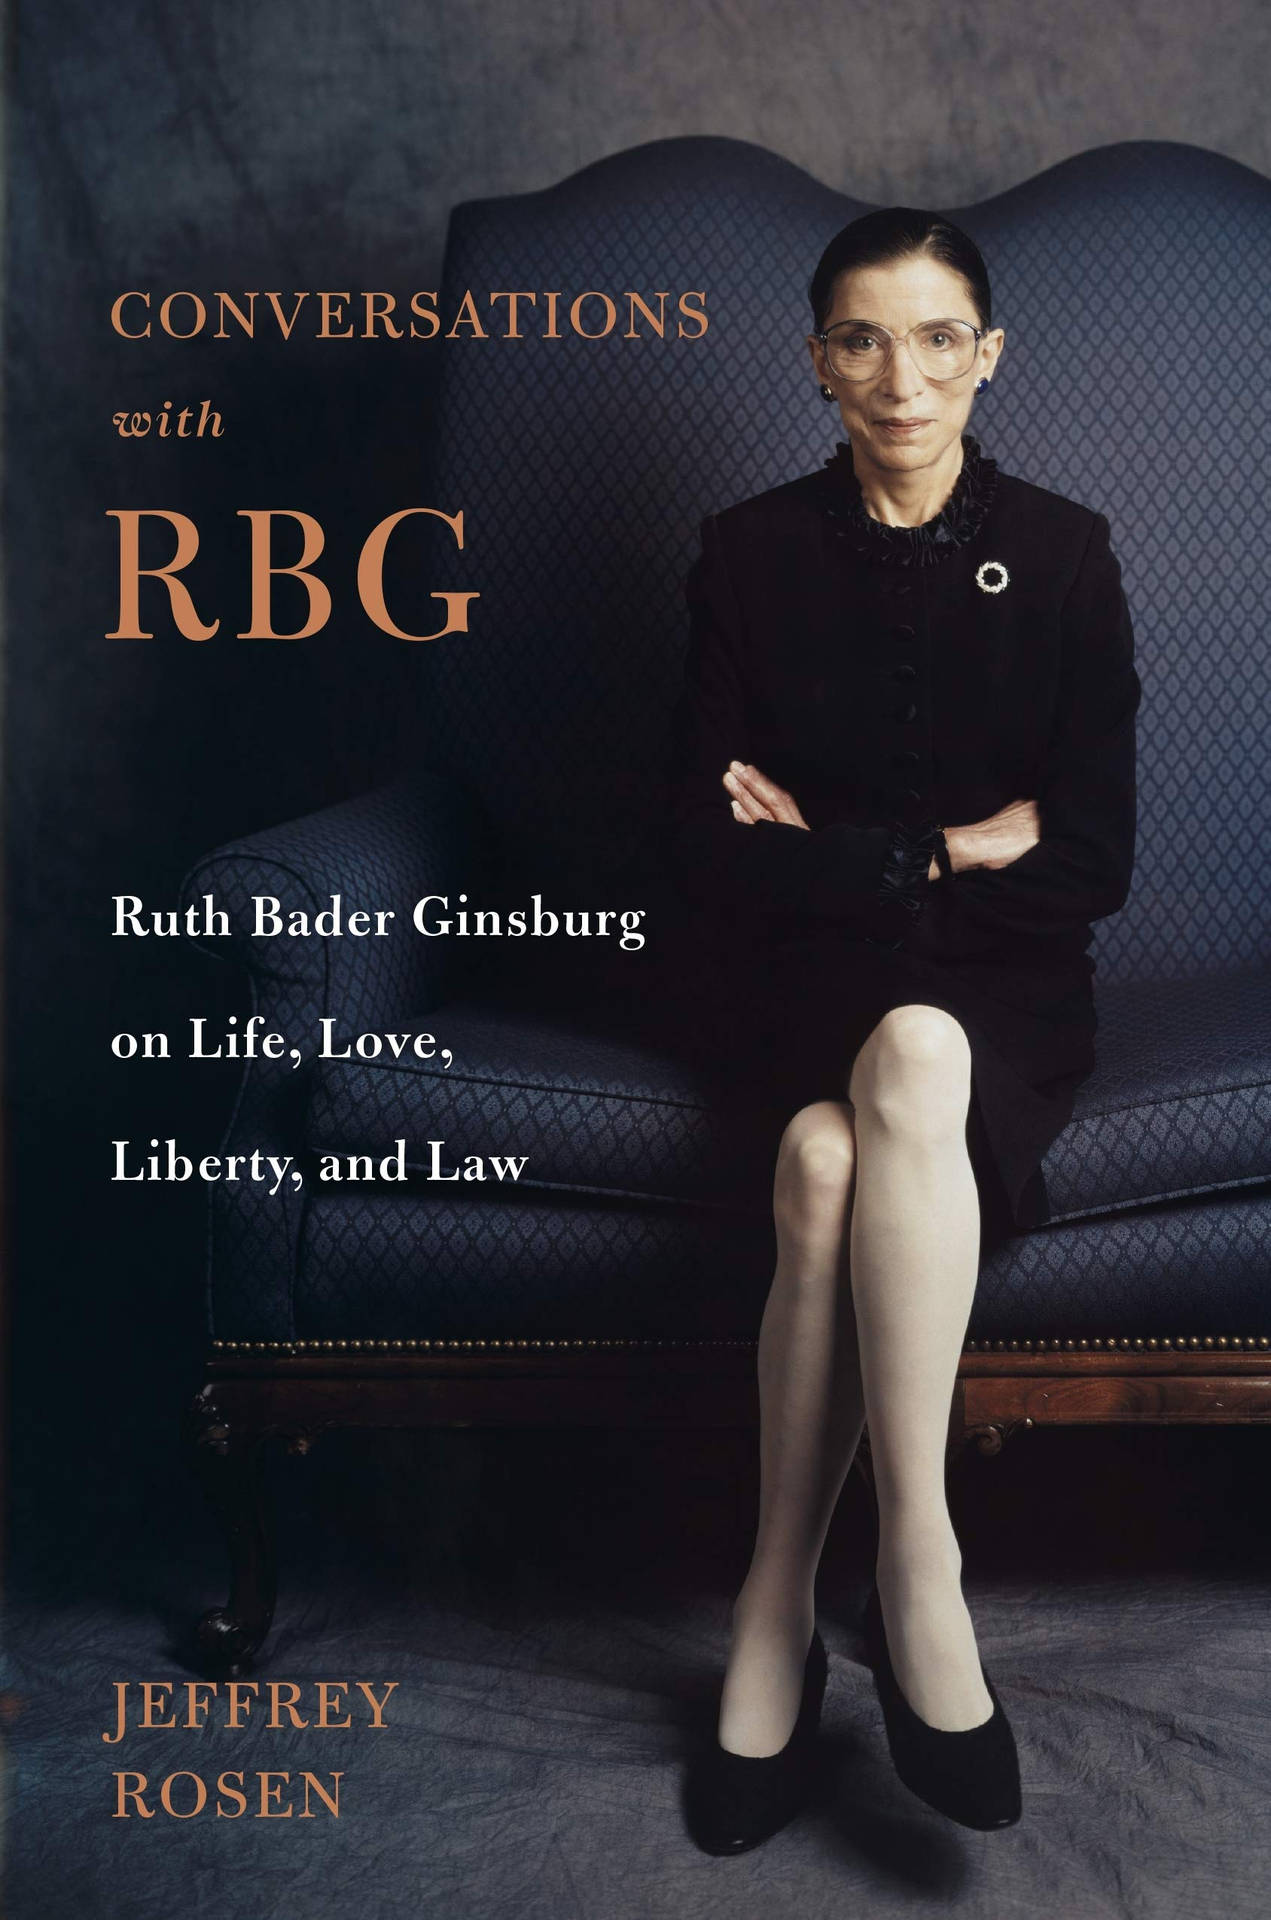 Ruth Bader Ginsburg Magazine Cover Photograph